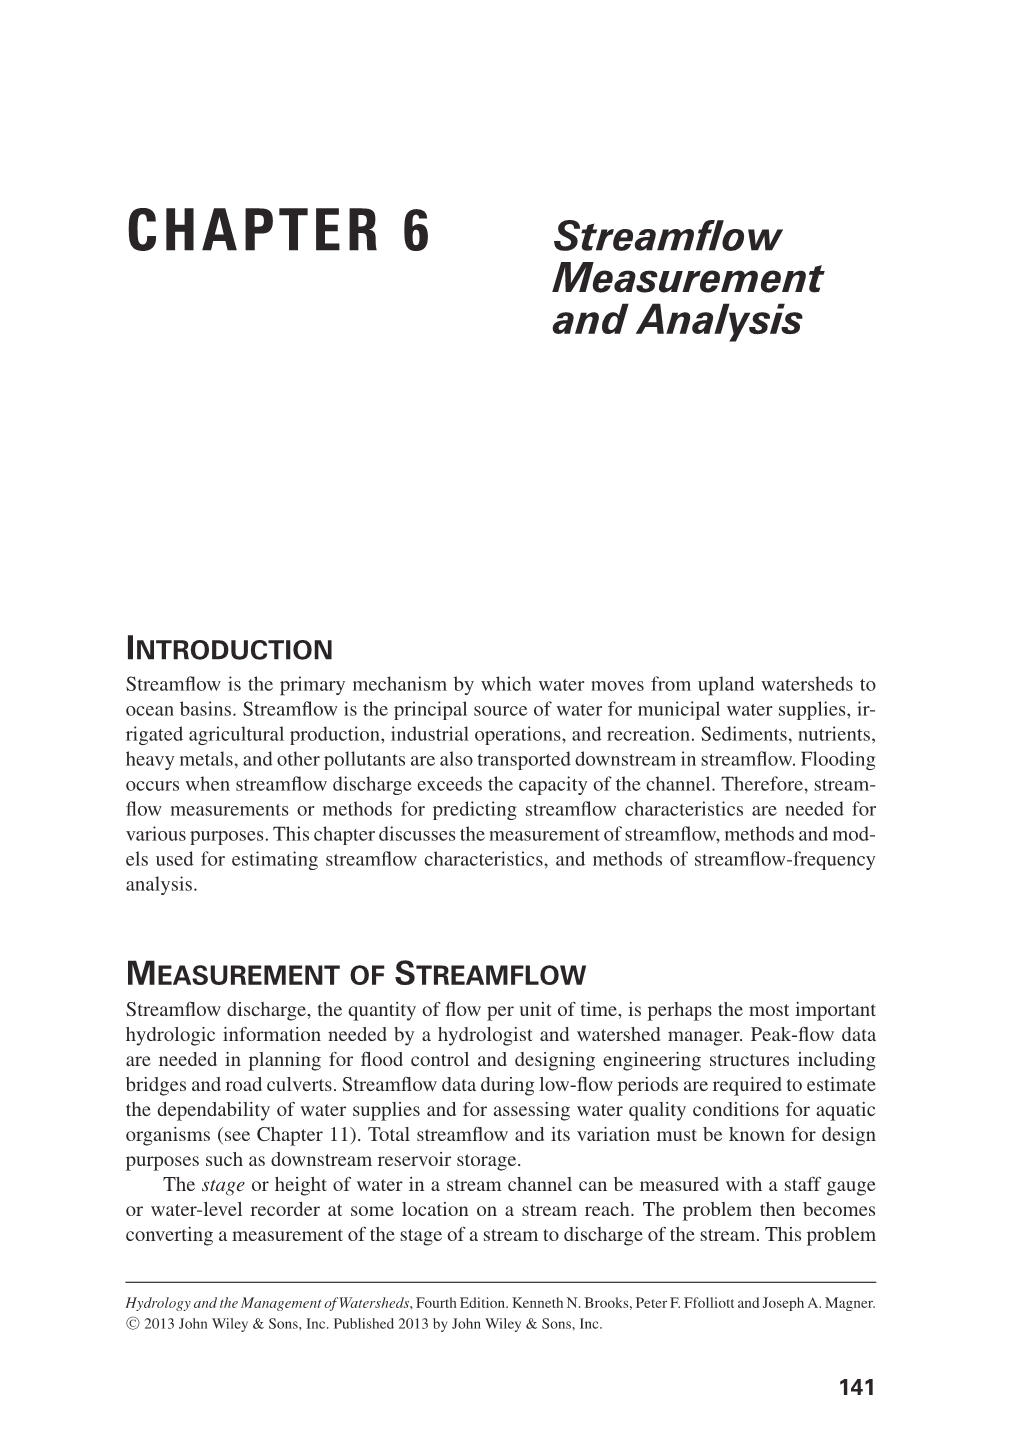 Streamflow Measurement and Analysis